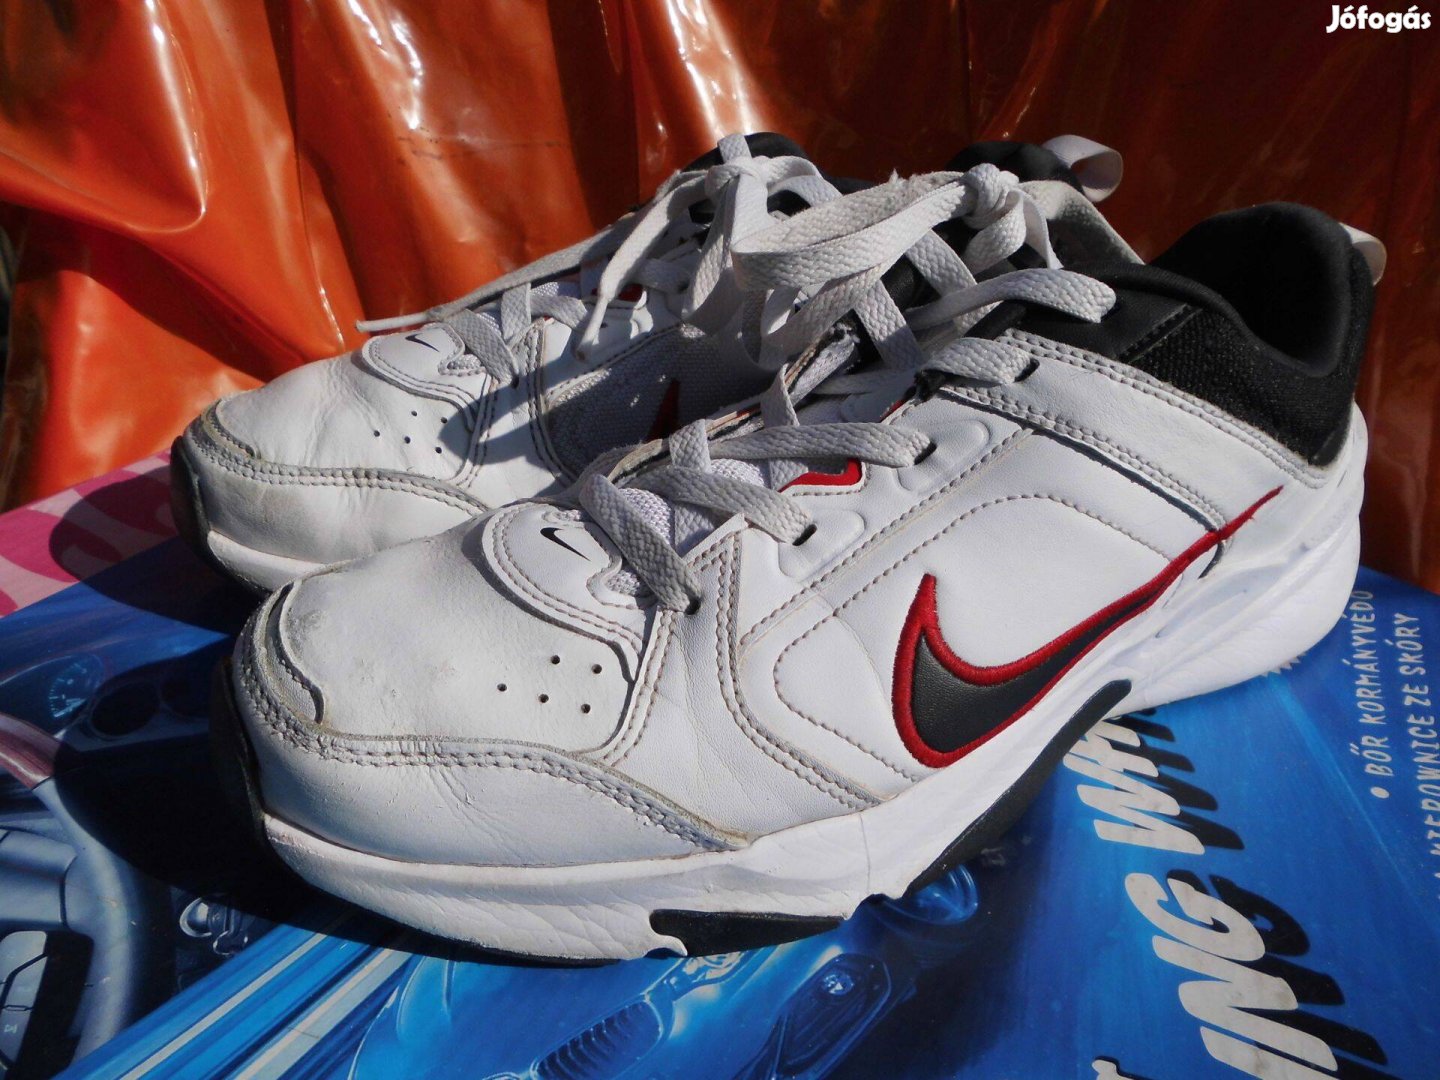 Nike Defyallday fehér bőr 42-es utcai-sportcipő eladó,